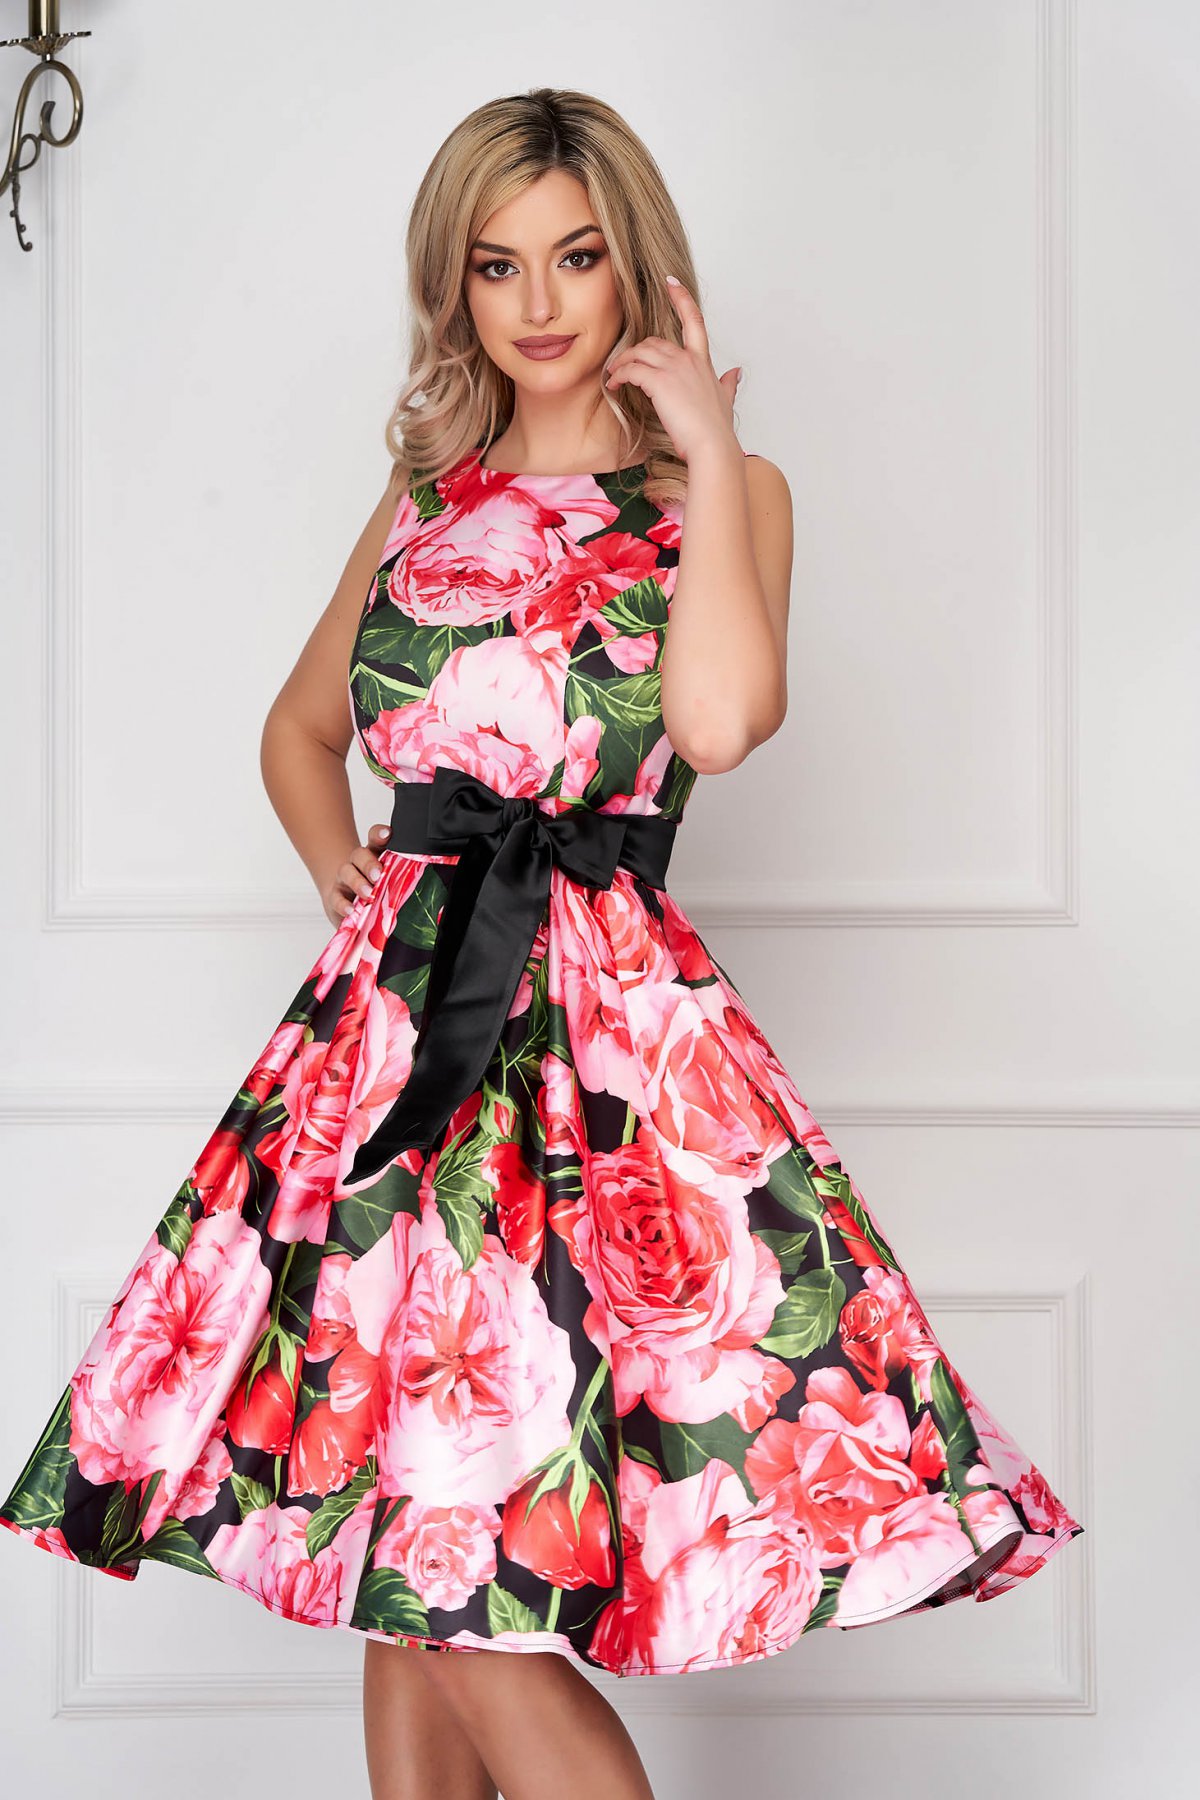 Roz Artista rochie cu imprimeu floral din satin de ocazie in clos